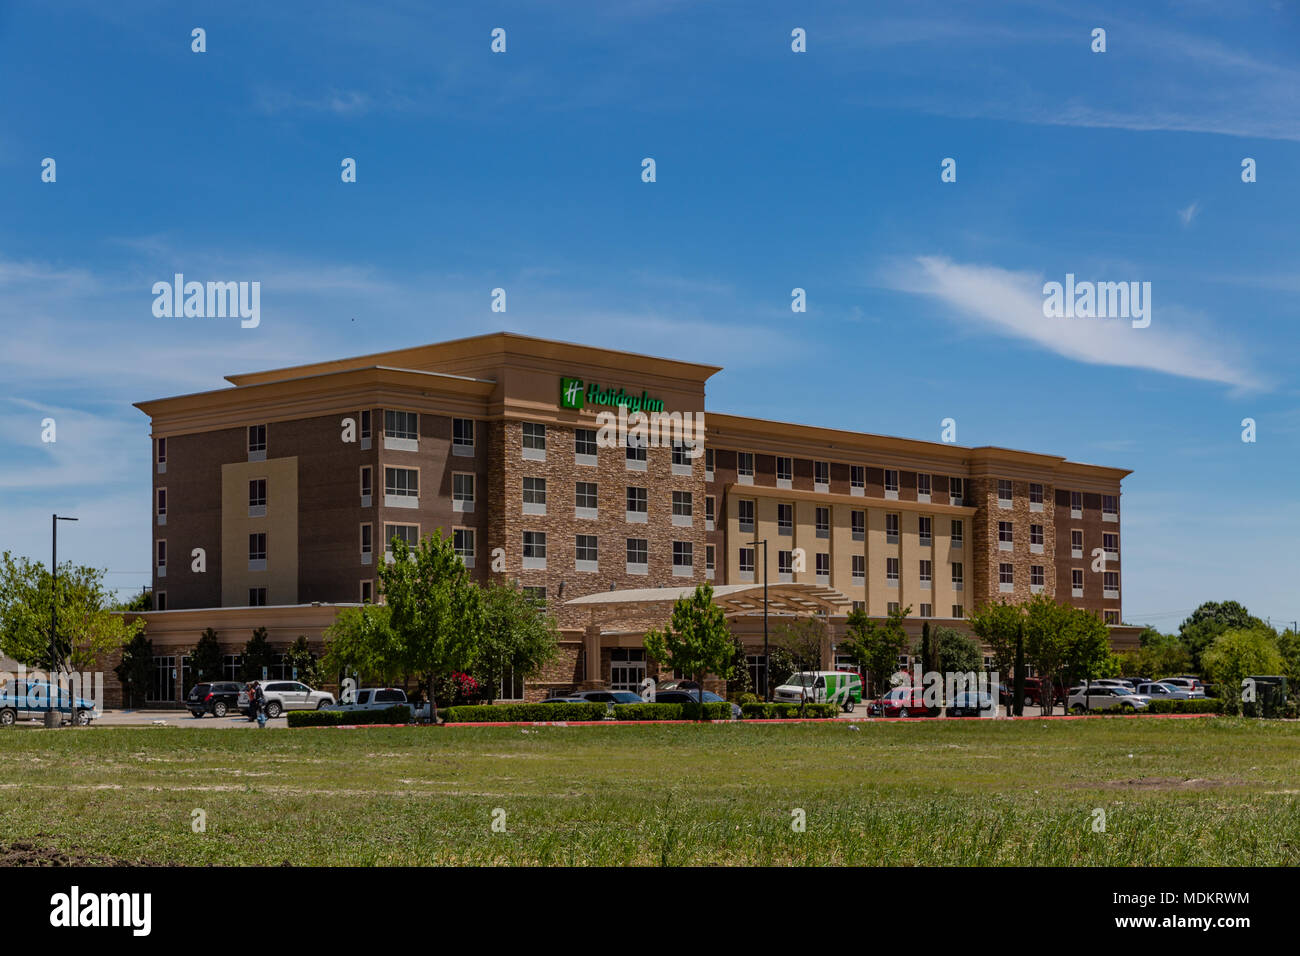 Holiday Inn in Garland Texas Stock Photo